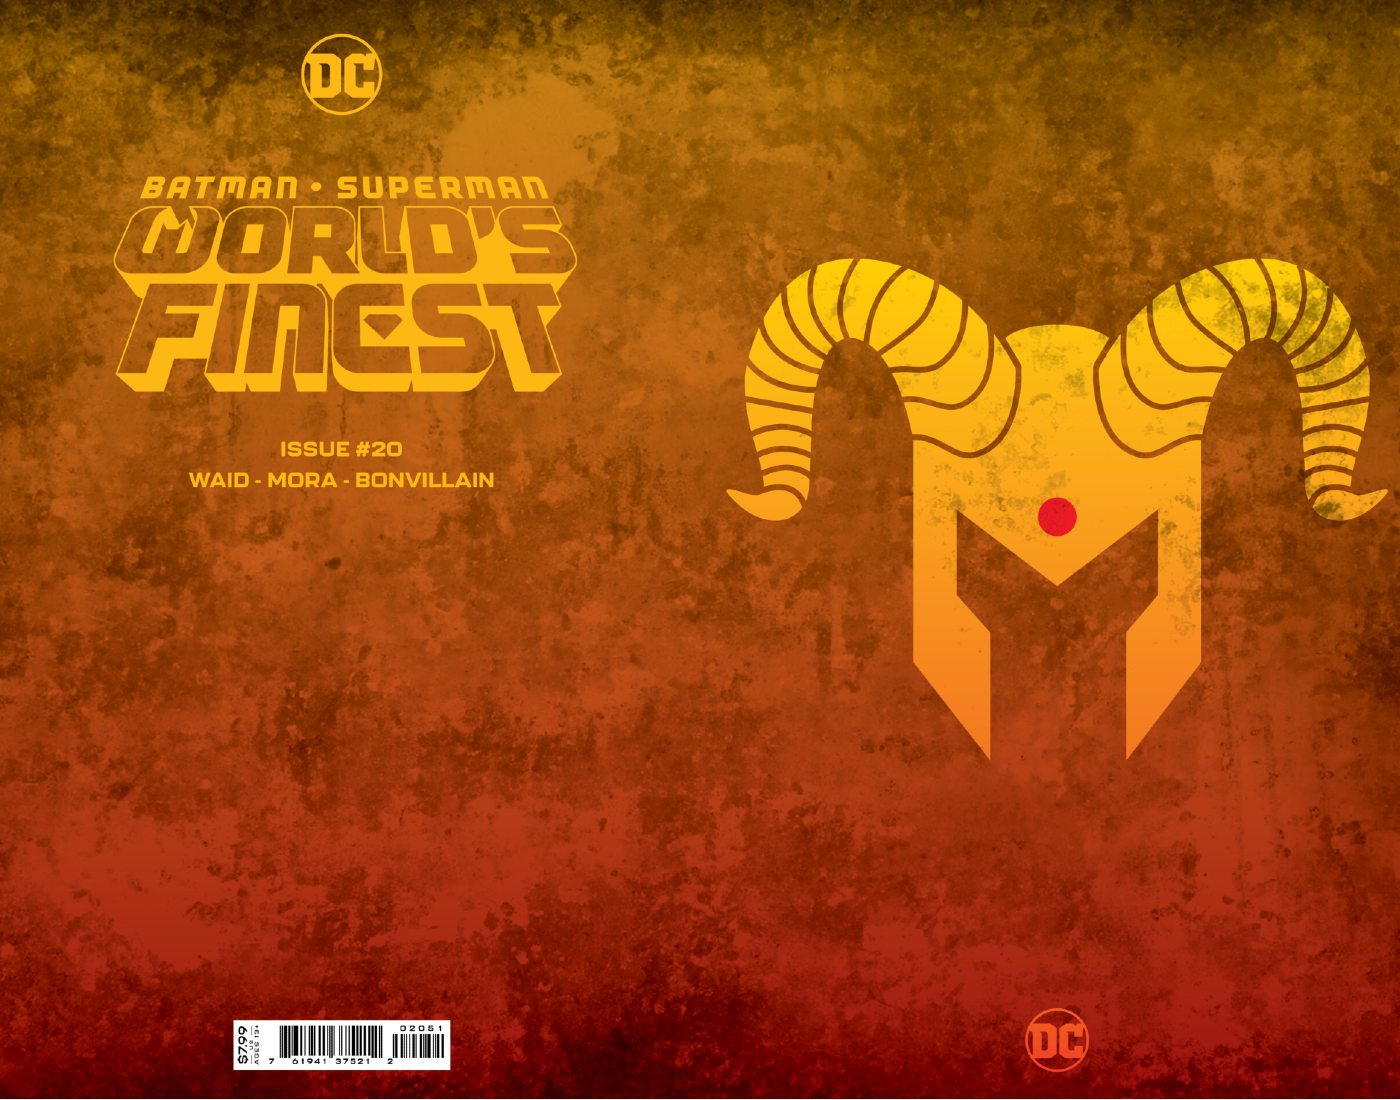 Batman Superman World's Finest #20 featuring Kingdom Come cover art-5